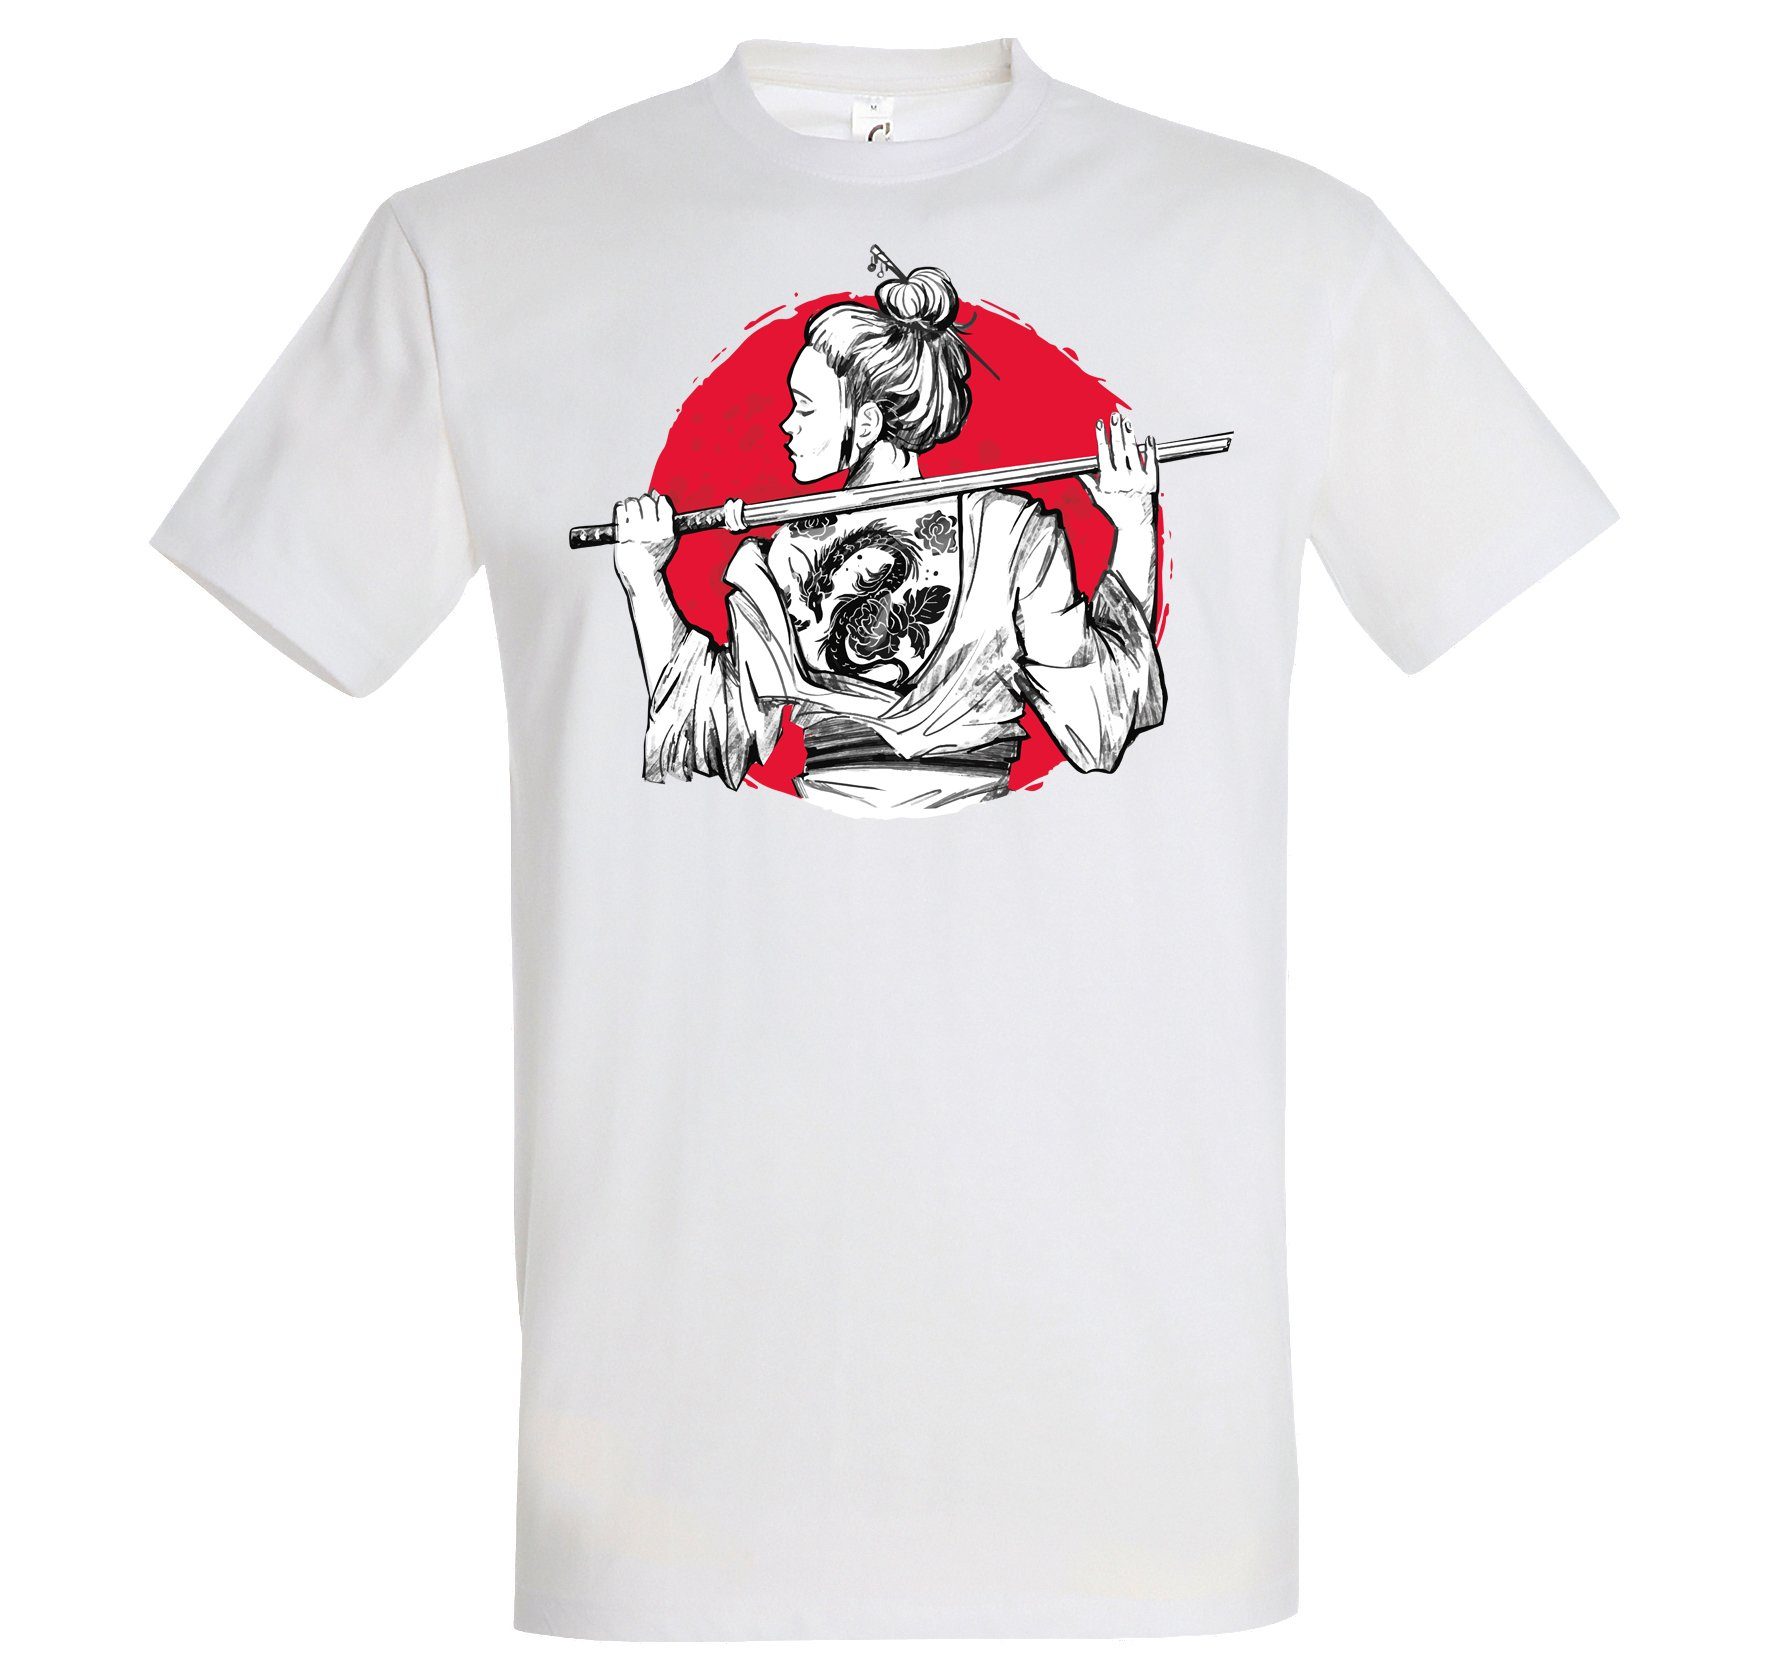 Youth Designz T-Shirt Herren Shirt Japan Weiss Frontdruck Girl Trendigem mit Samurai